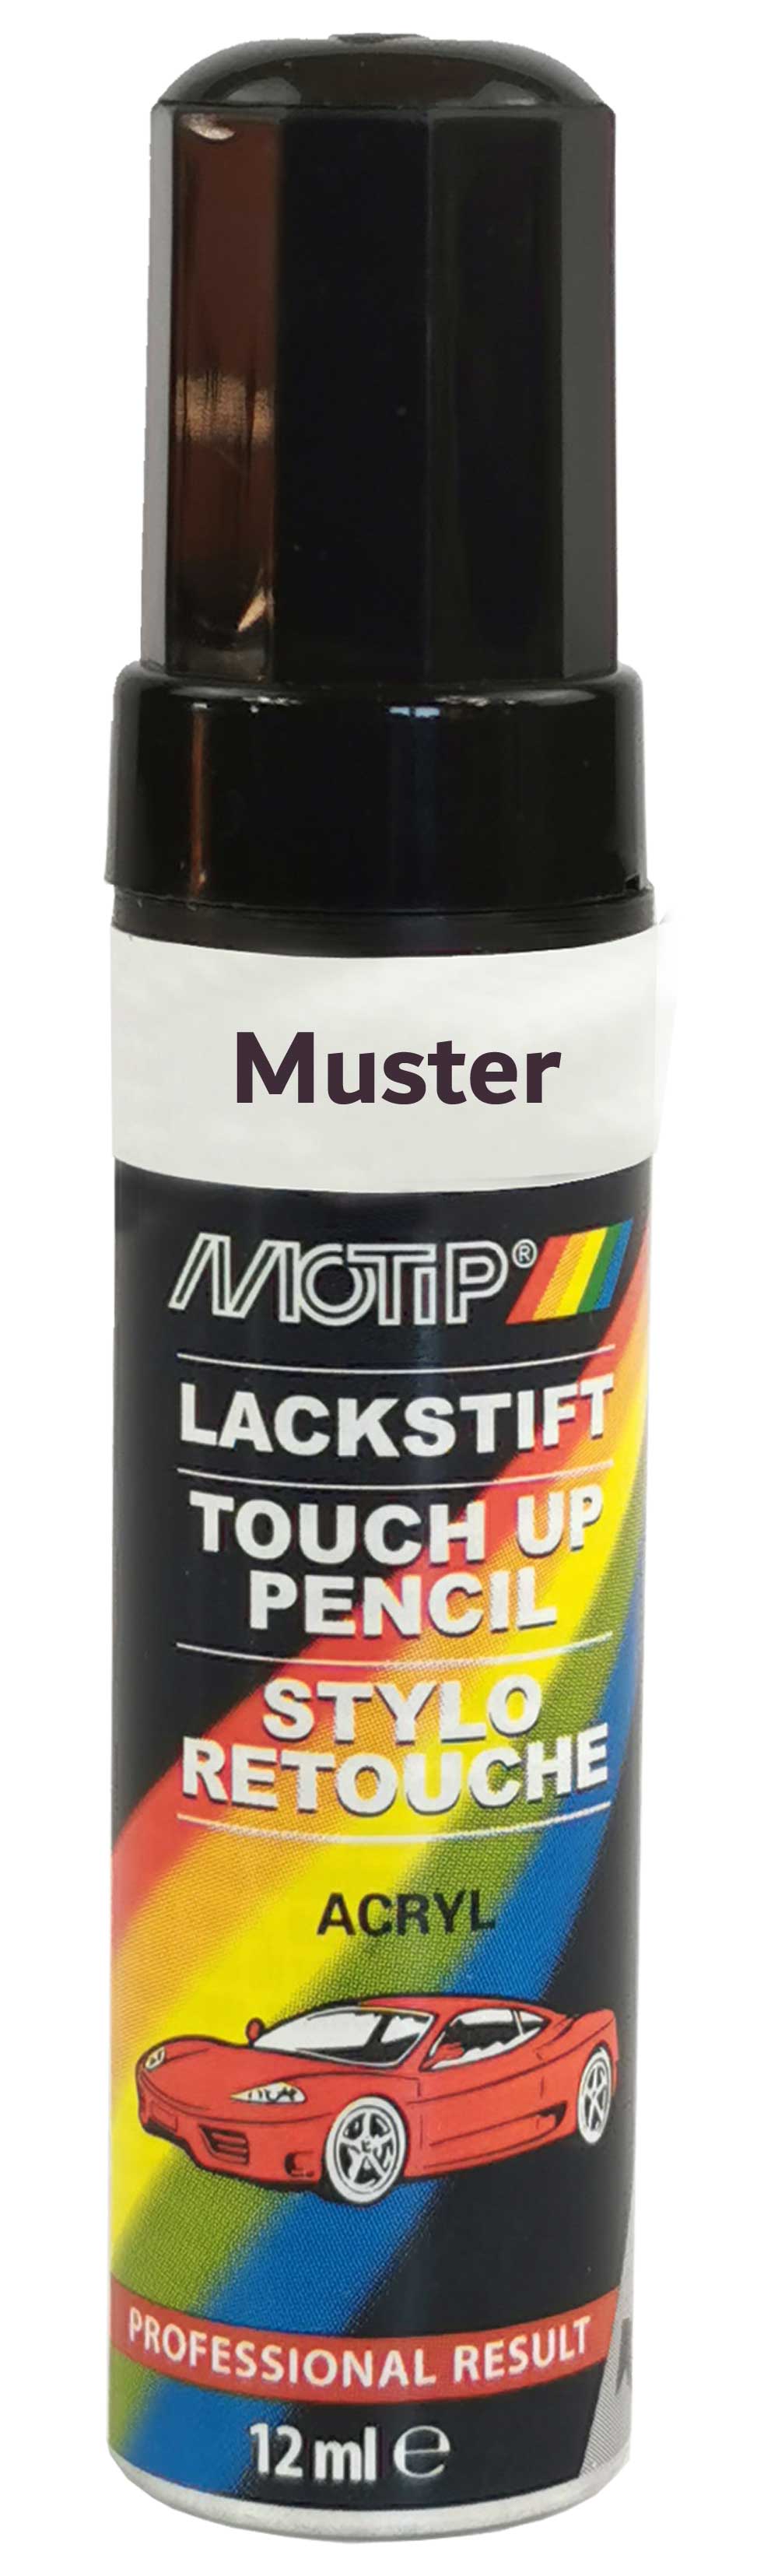 Motip Lack-Stift grau 12ml 951030